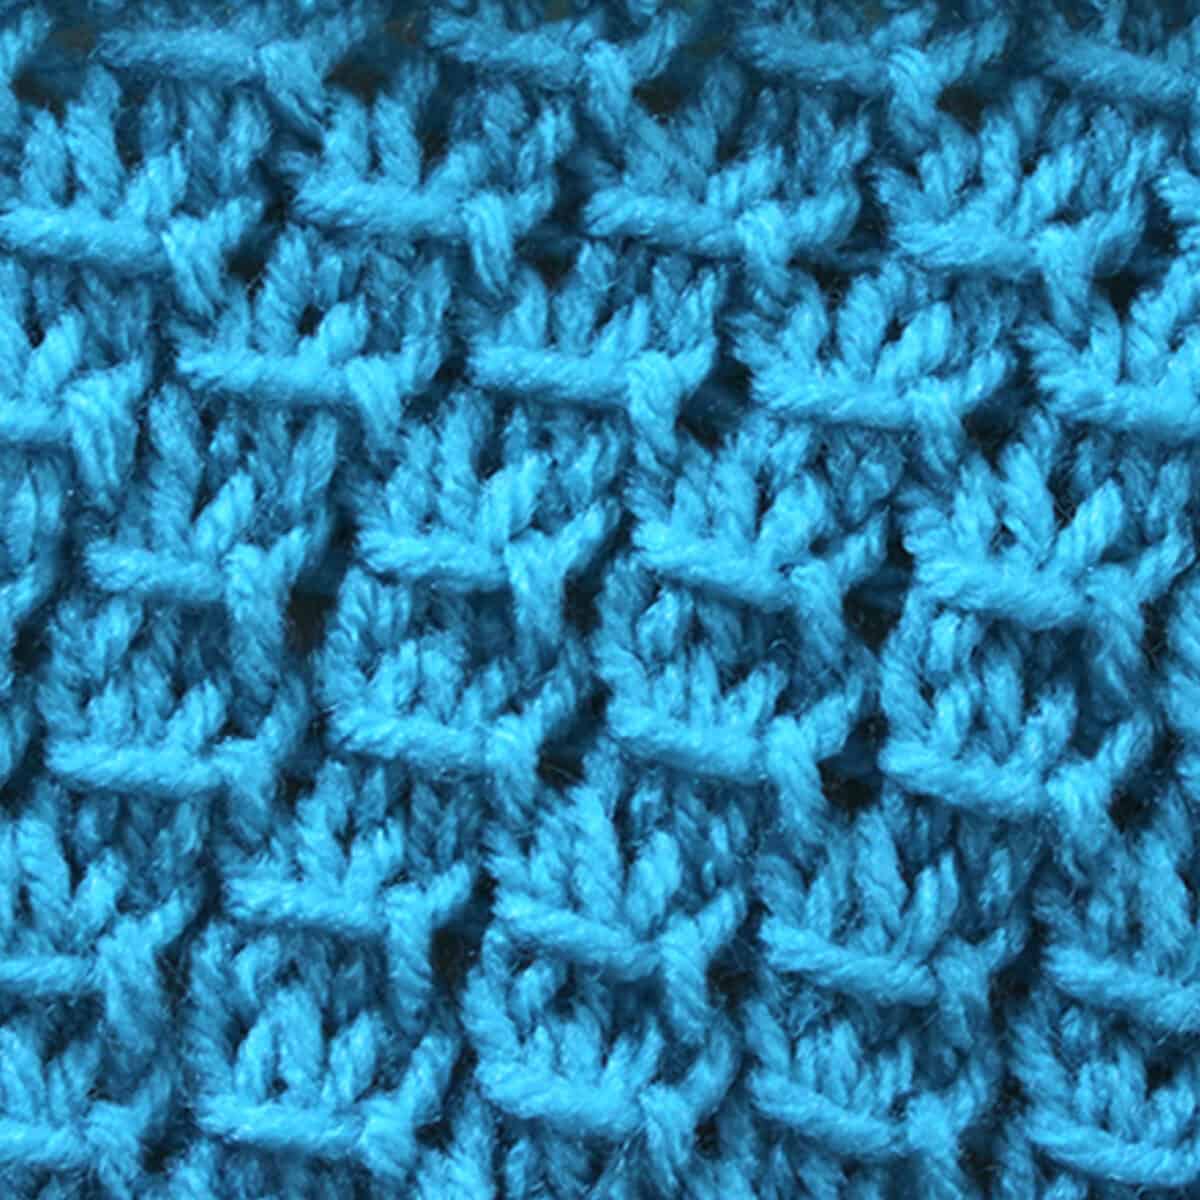 Star Knit Stitch Pattern brioche texture in blue color yarn.